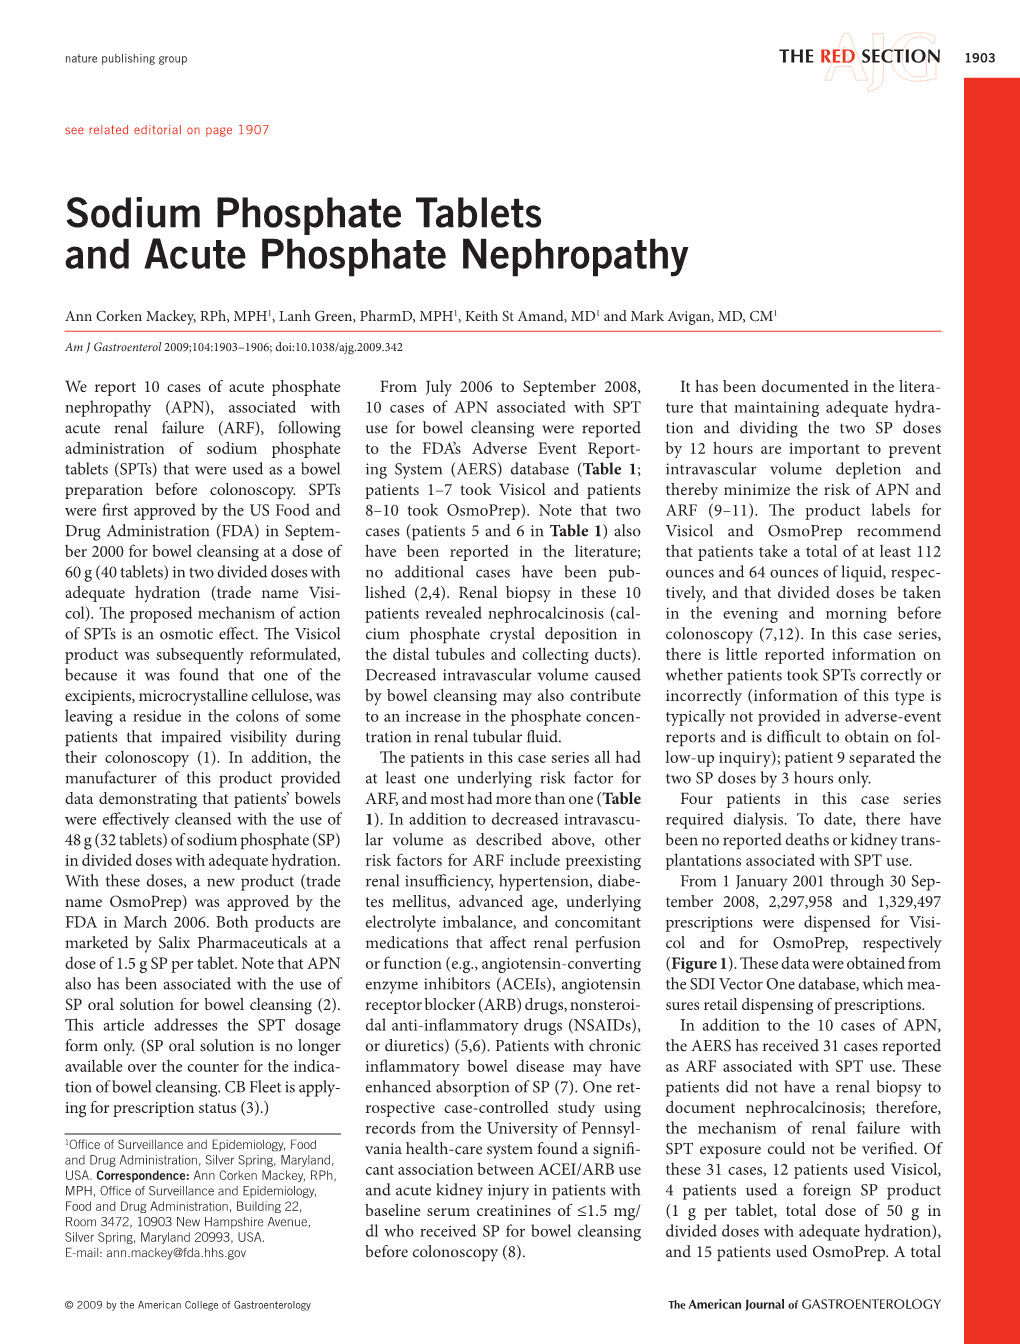 Sodium Phosphate Tablets and Acute Phosphate Nephropathy